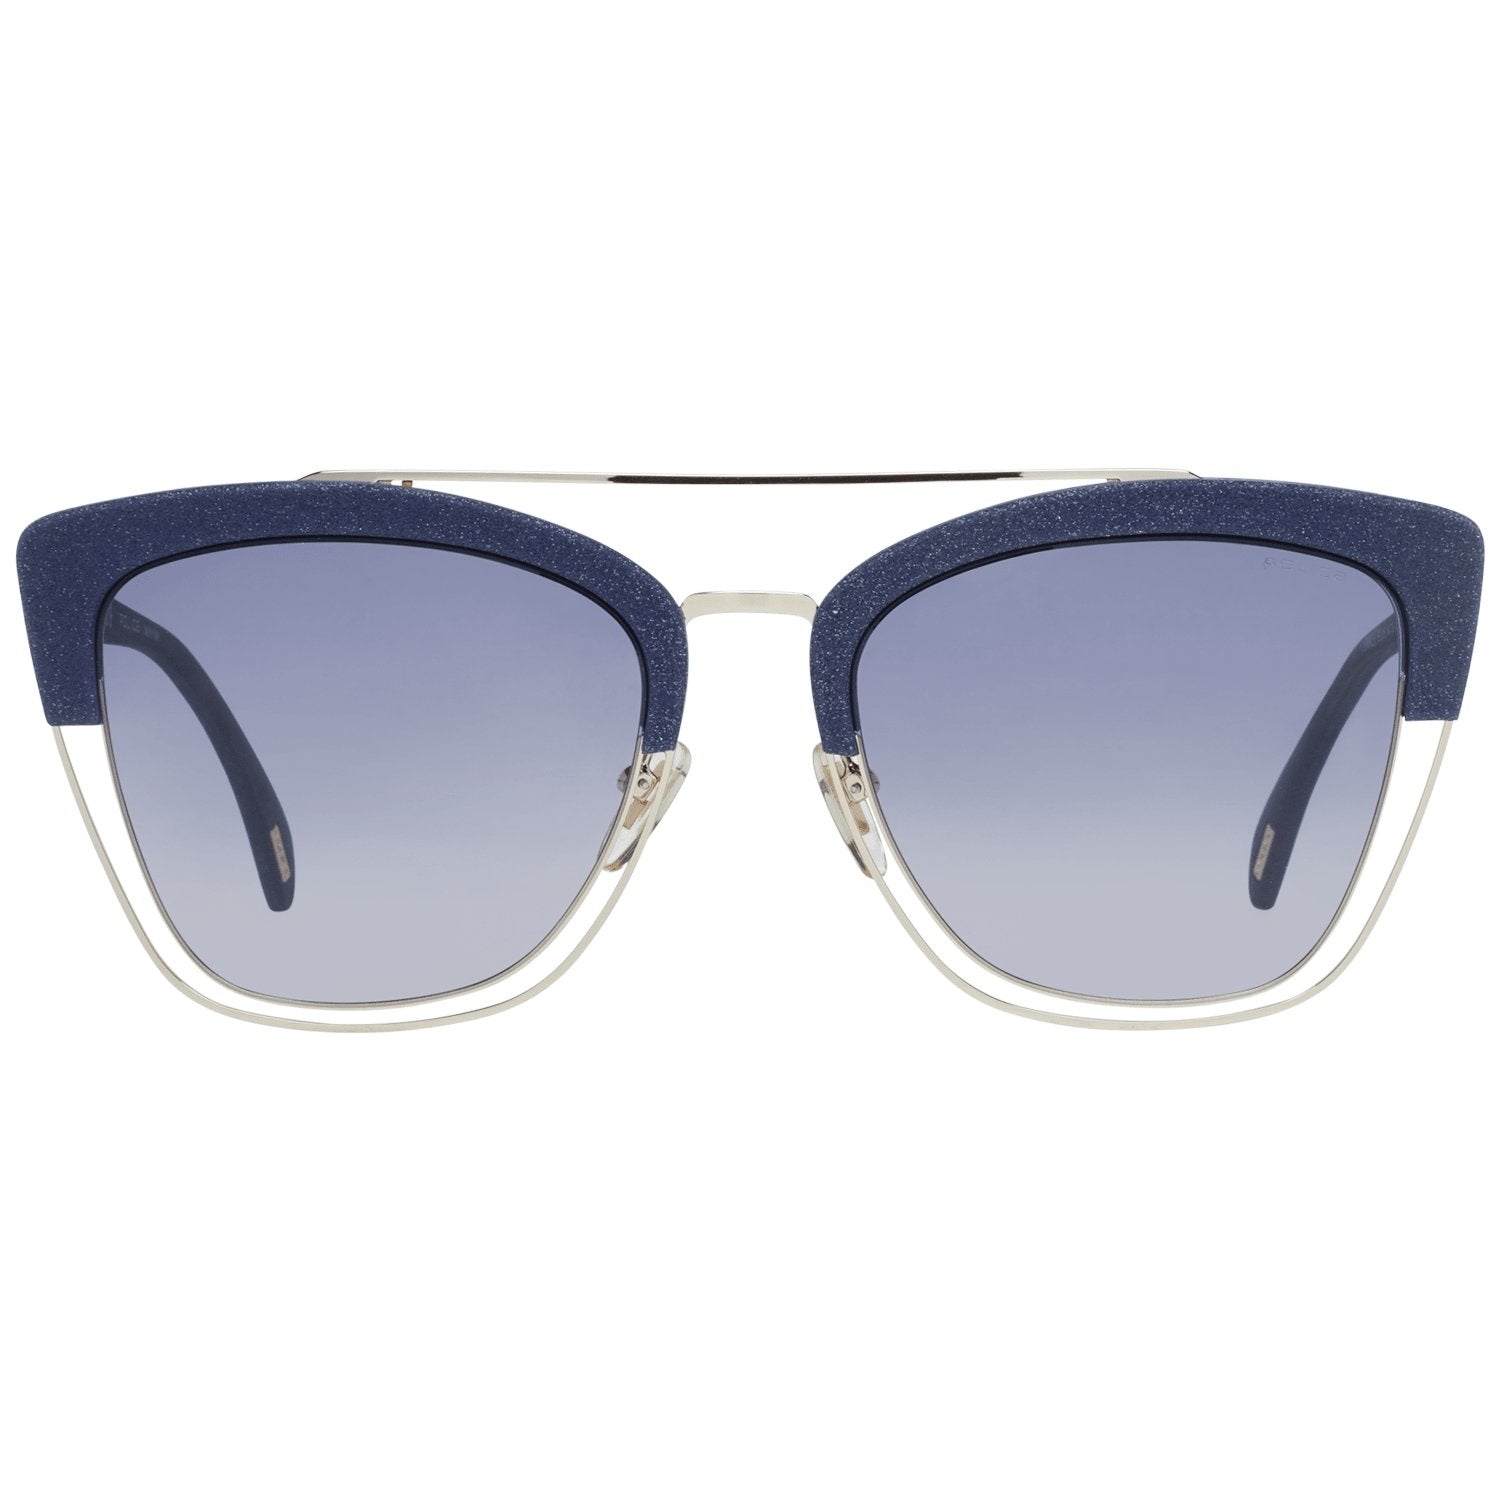 Silver Women Sunglasses - Fizigo